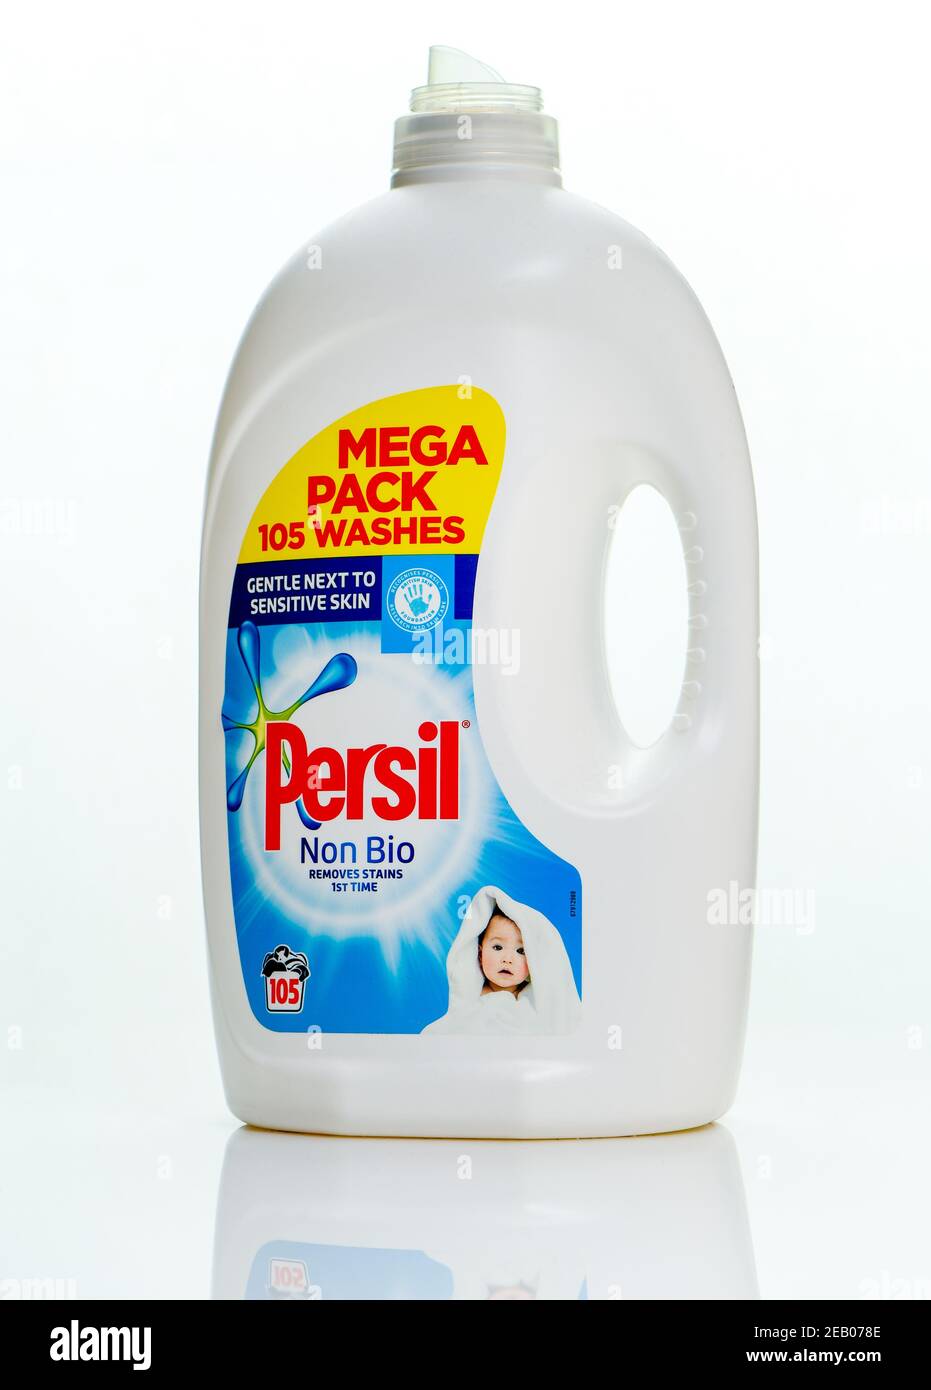 Persil non bio mega pack clothes household chores washing up liquid large bottle on white background with reflection Stock Photo